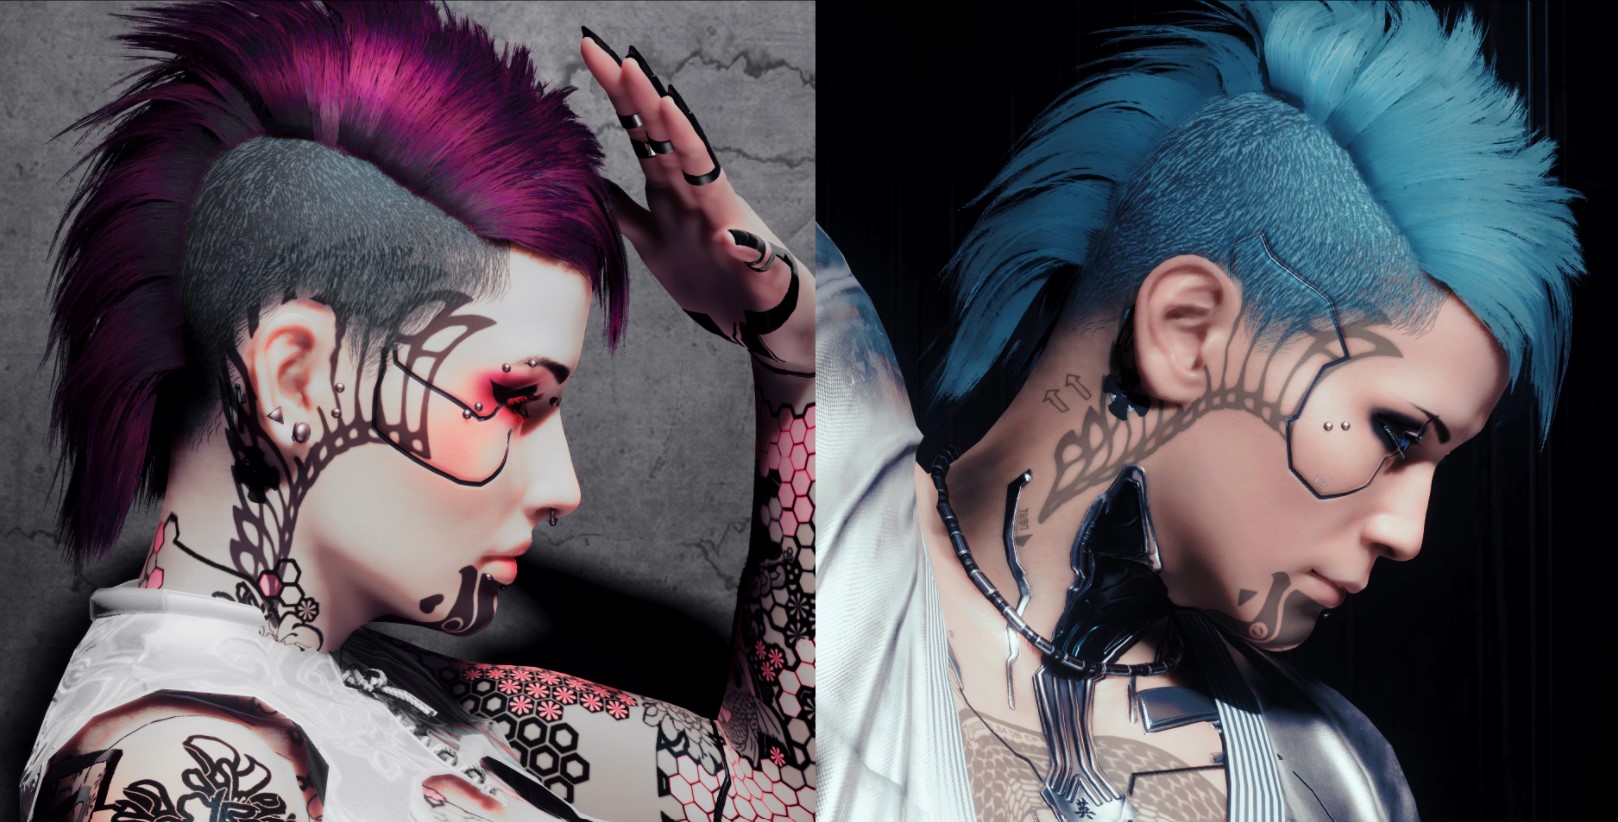 an hd goth emo punk portrait. her hair is dark brown | Stable Diffusion